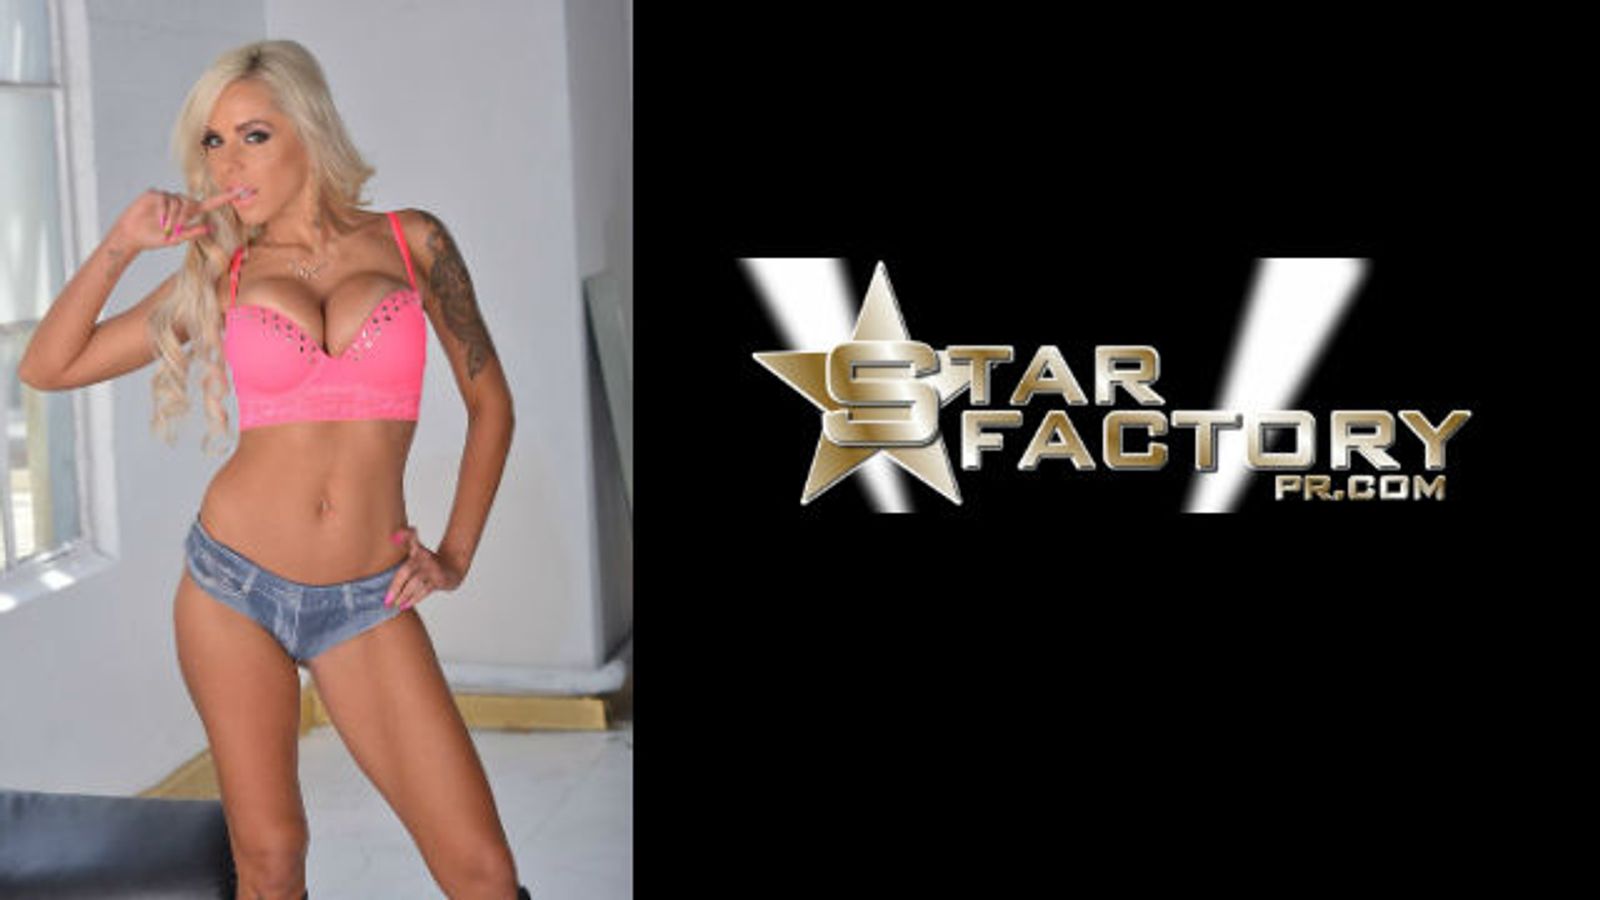 Nina Elle Retains Publicity Services of Star Factory PR